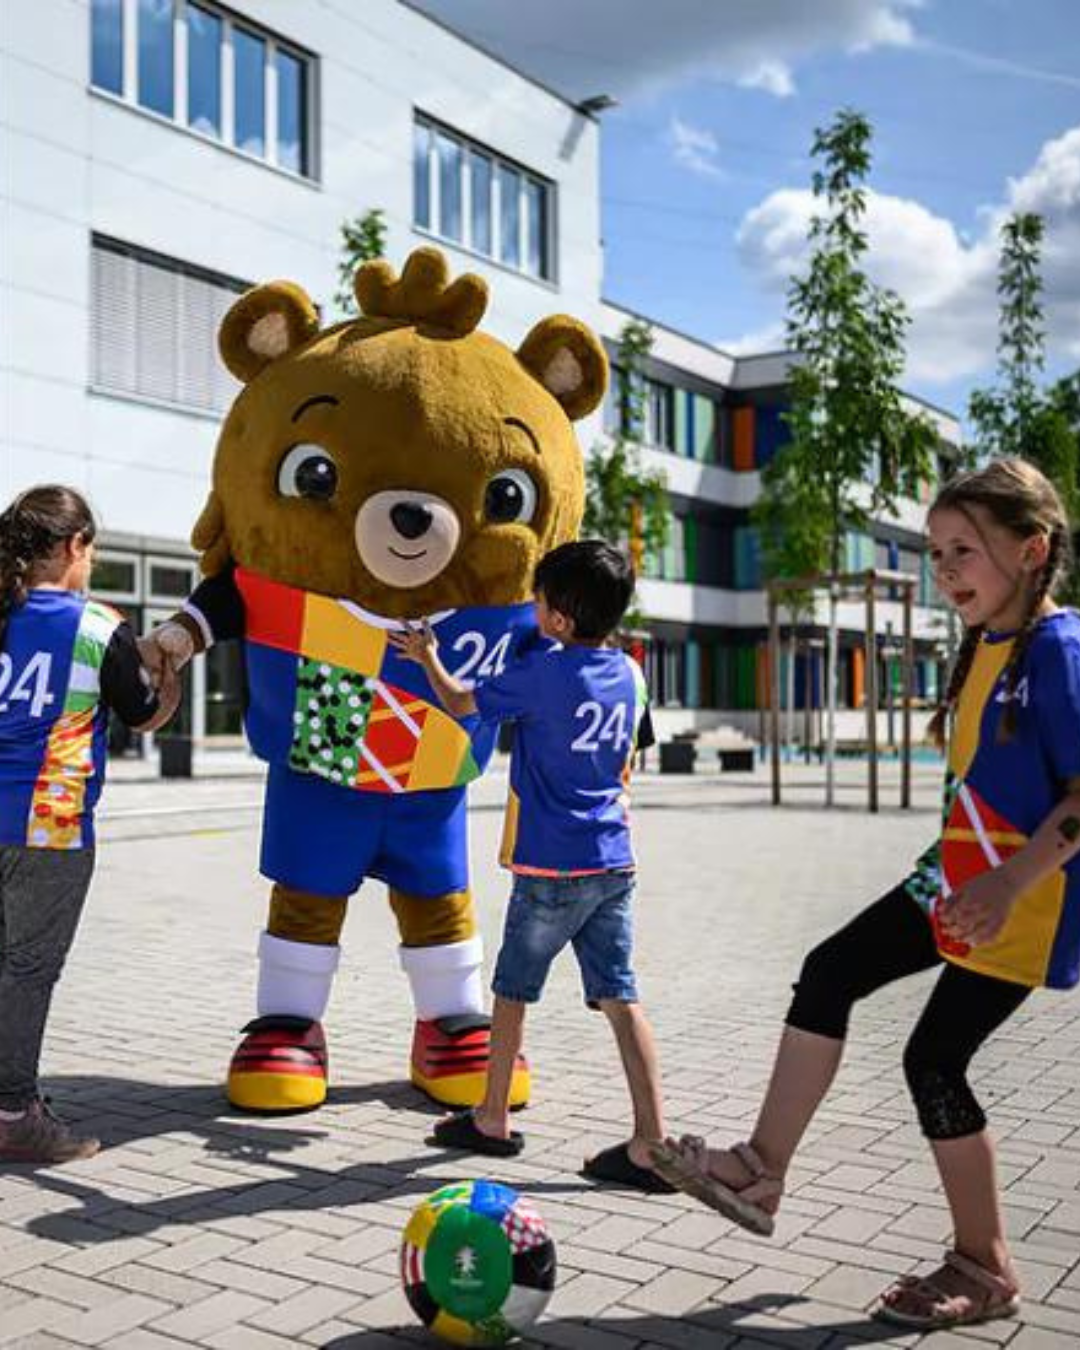 The EURO 2024 mascot is a bear